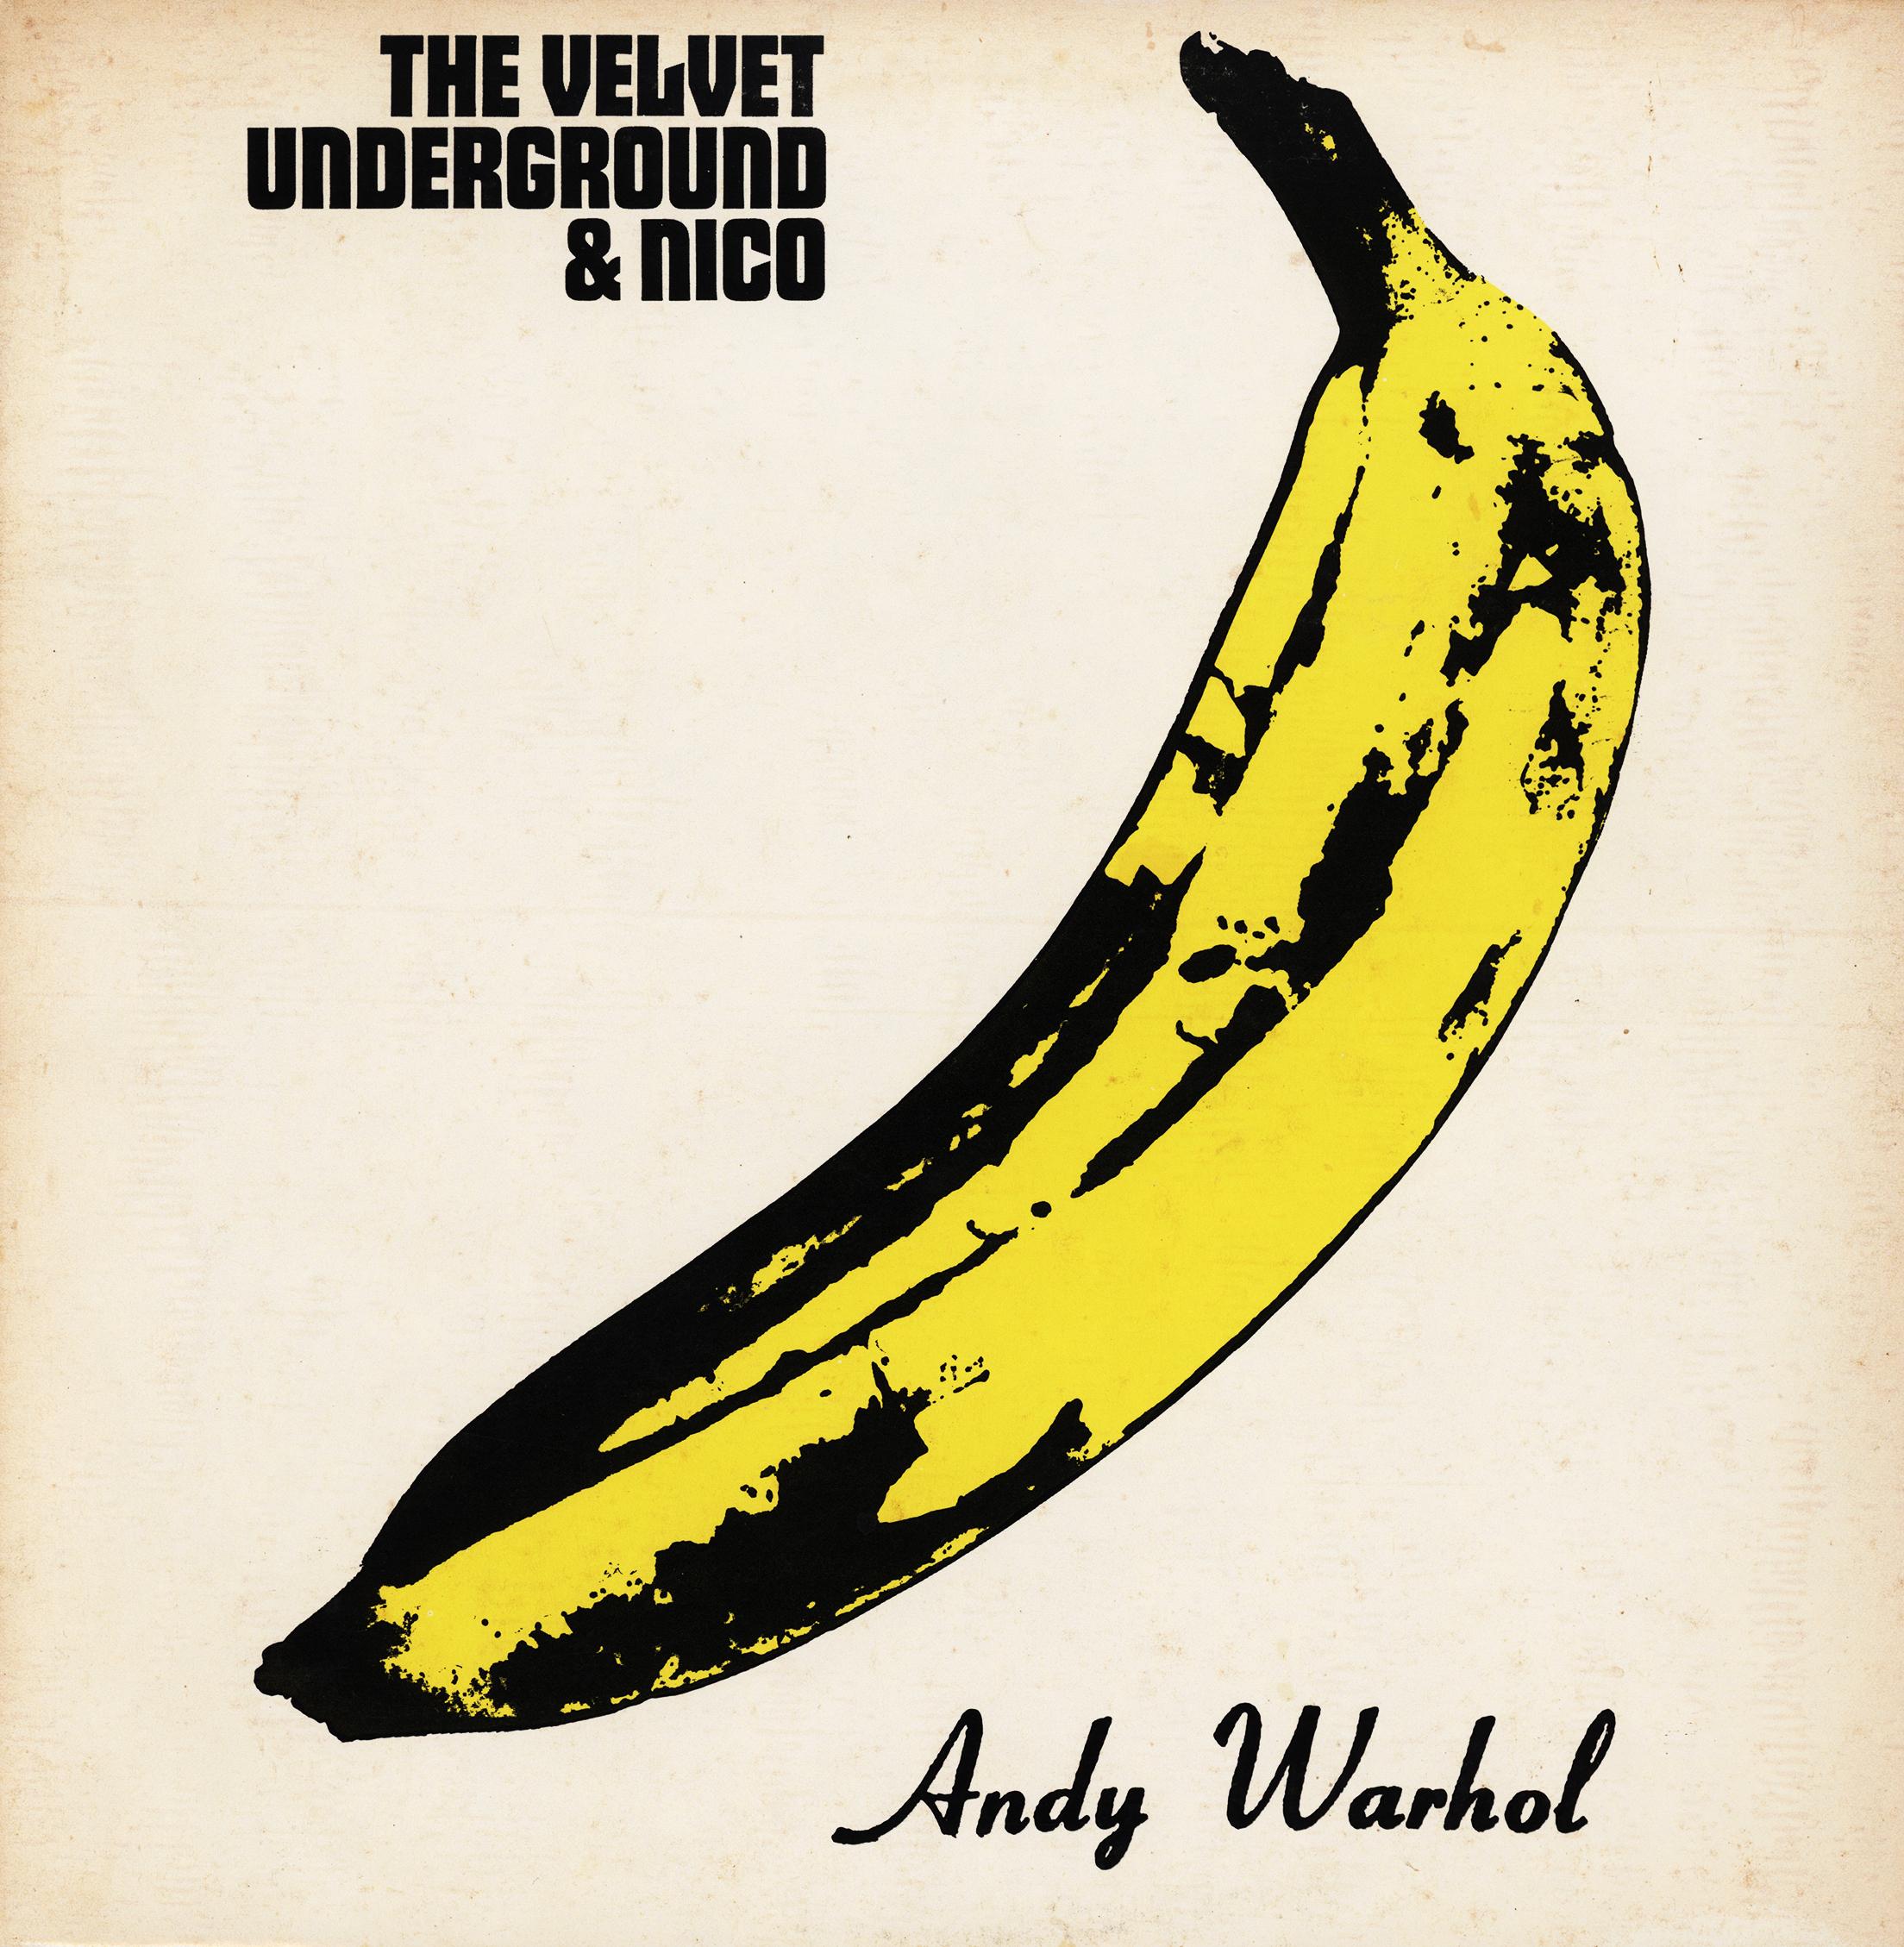 The Velvet Underground & Nico, Self-Titled, LP, 1985